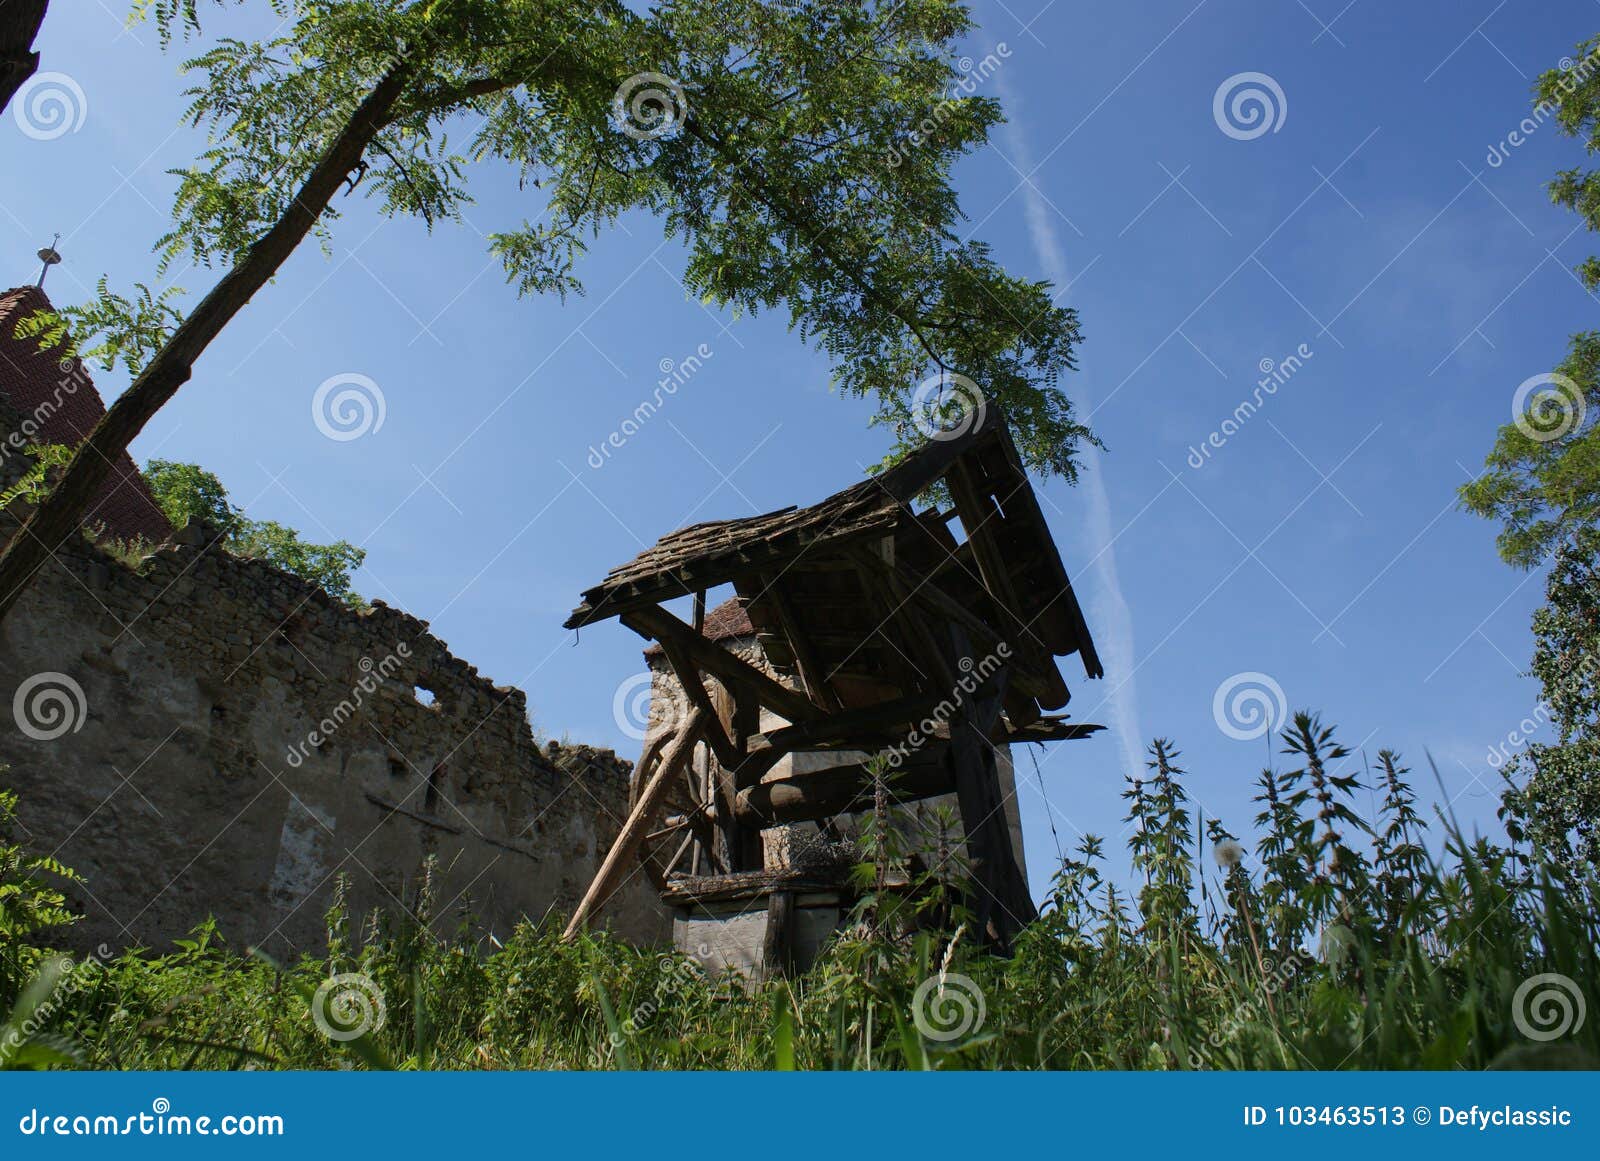 the old well. arcus covasna transylvania romania